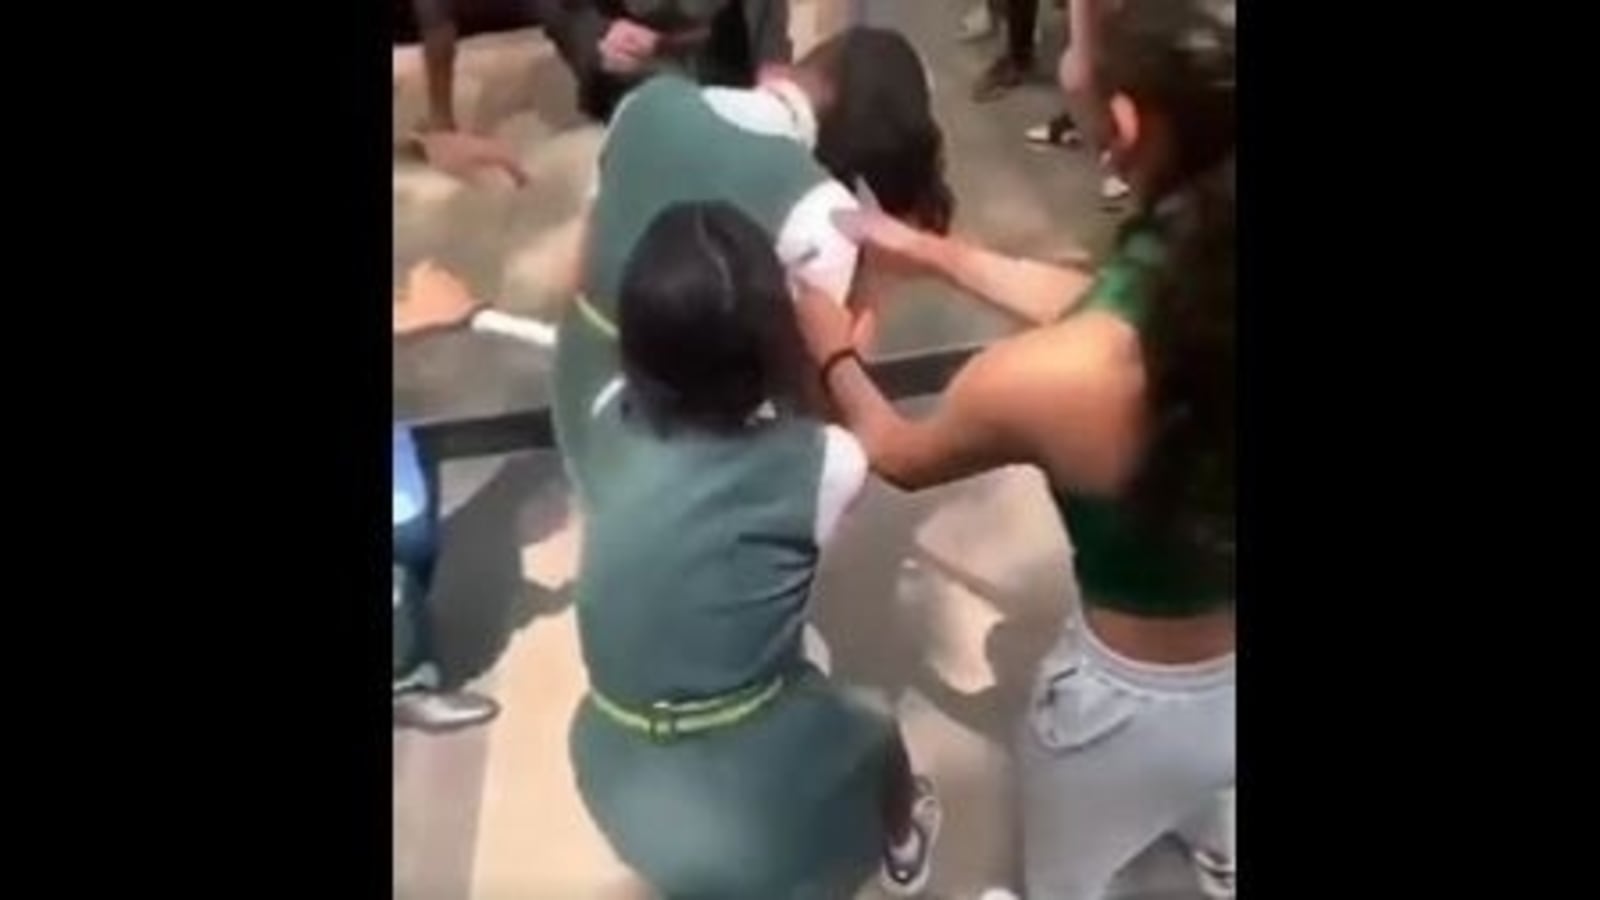 Bangalore School Girls Free Porn Veedios - Video of Bengaluru girls fighting on street in school uniform emerges |  Latest News India - Hindustan Times